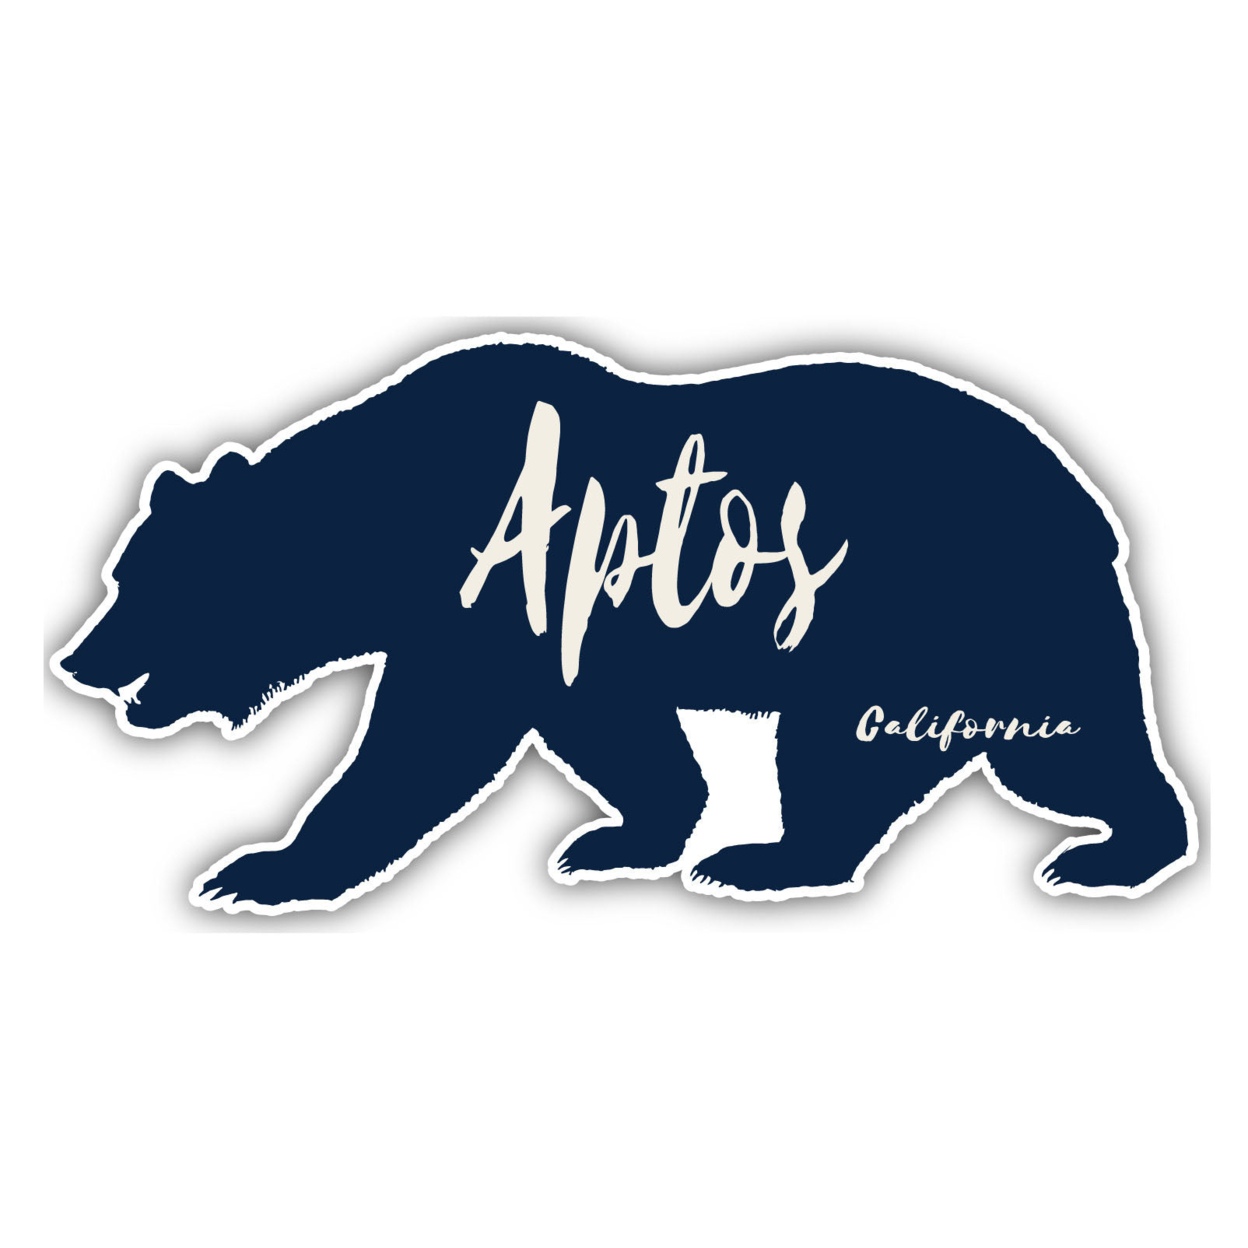 Aptos California Souvenir Decorative Stickers (Choose Theme And Size) - Single Unit, 2-Inch, Bear